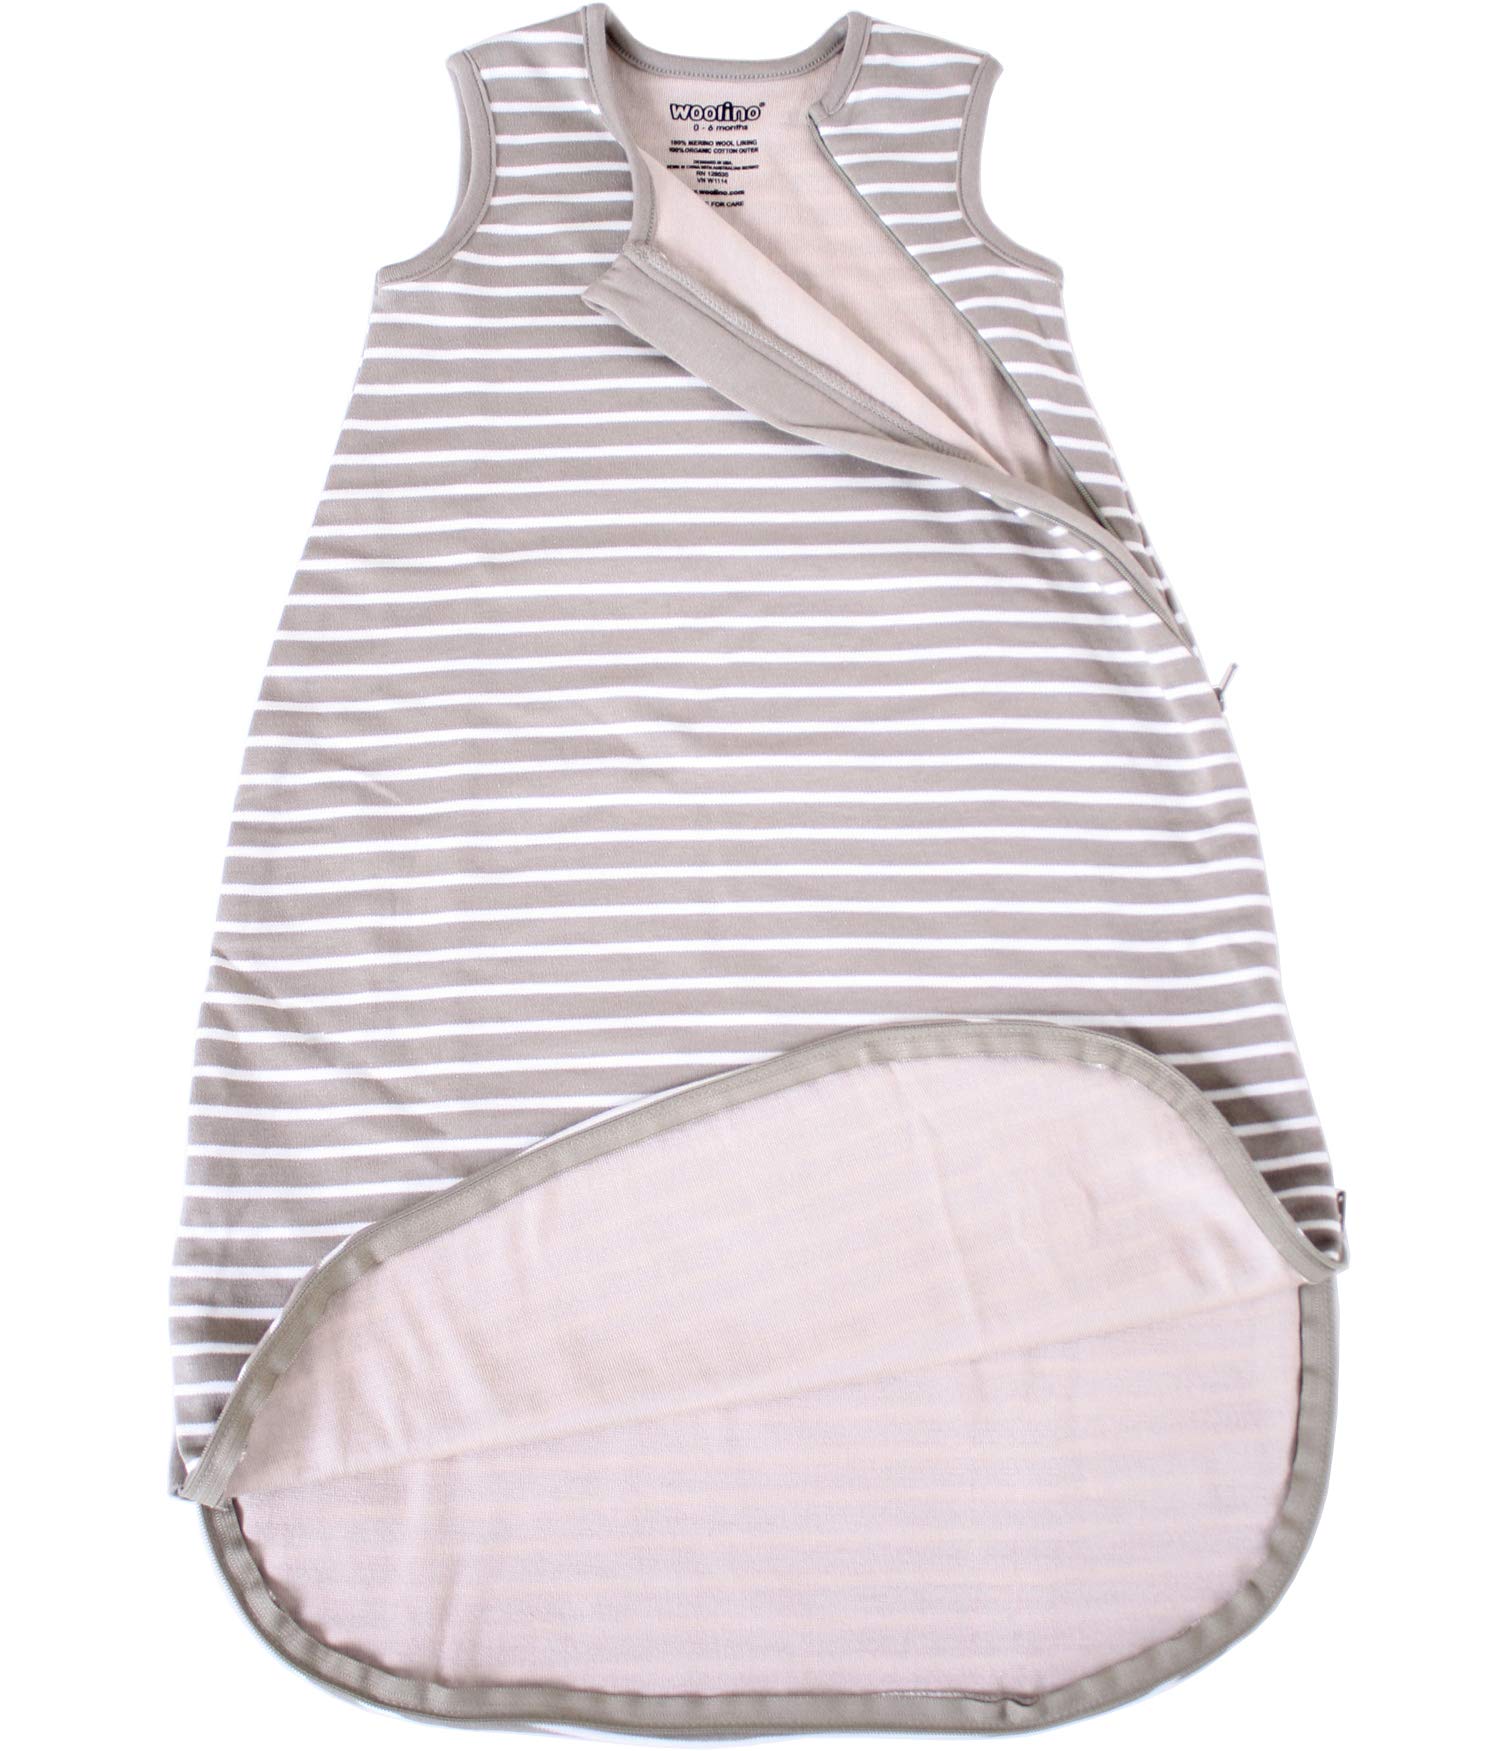 Baby Sleeping Bag, 4 Season Basic Merino Wool Wearable Blanket, 6-18m, Earth